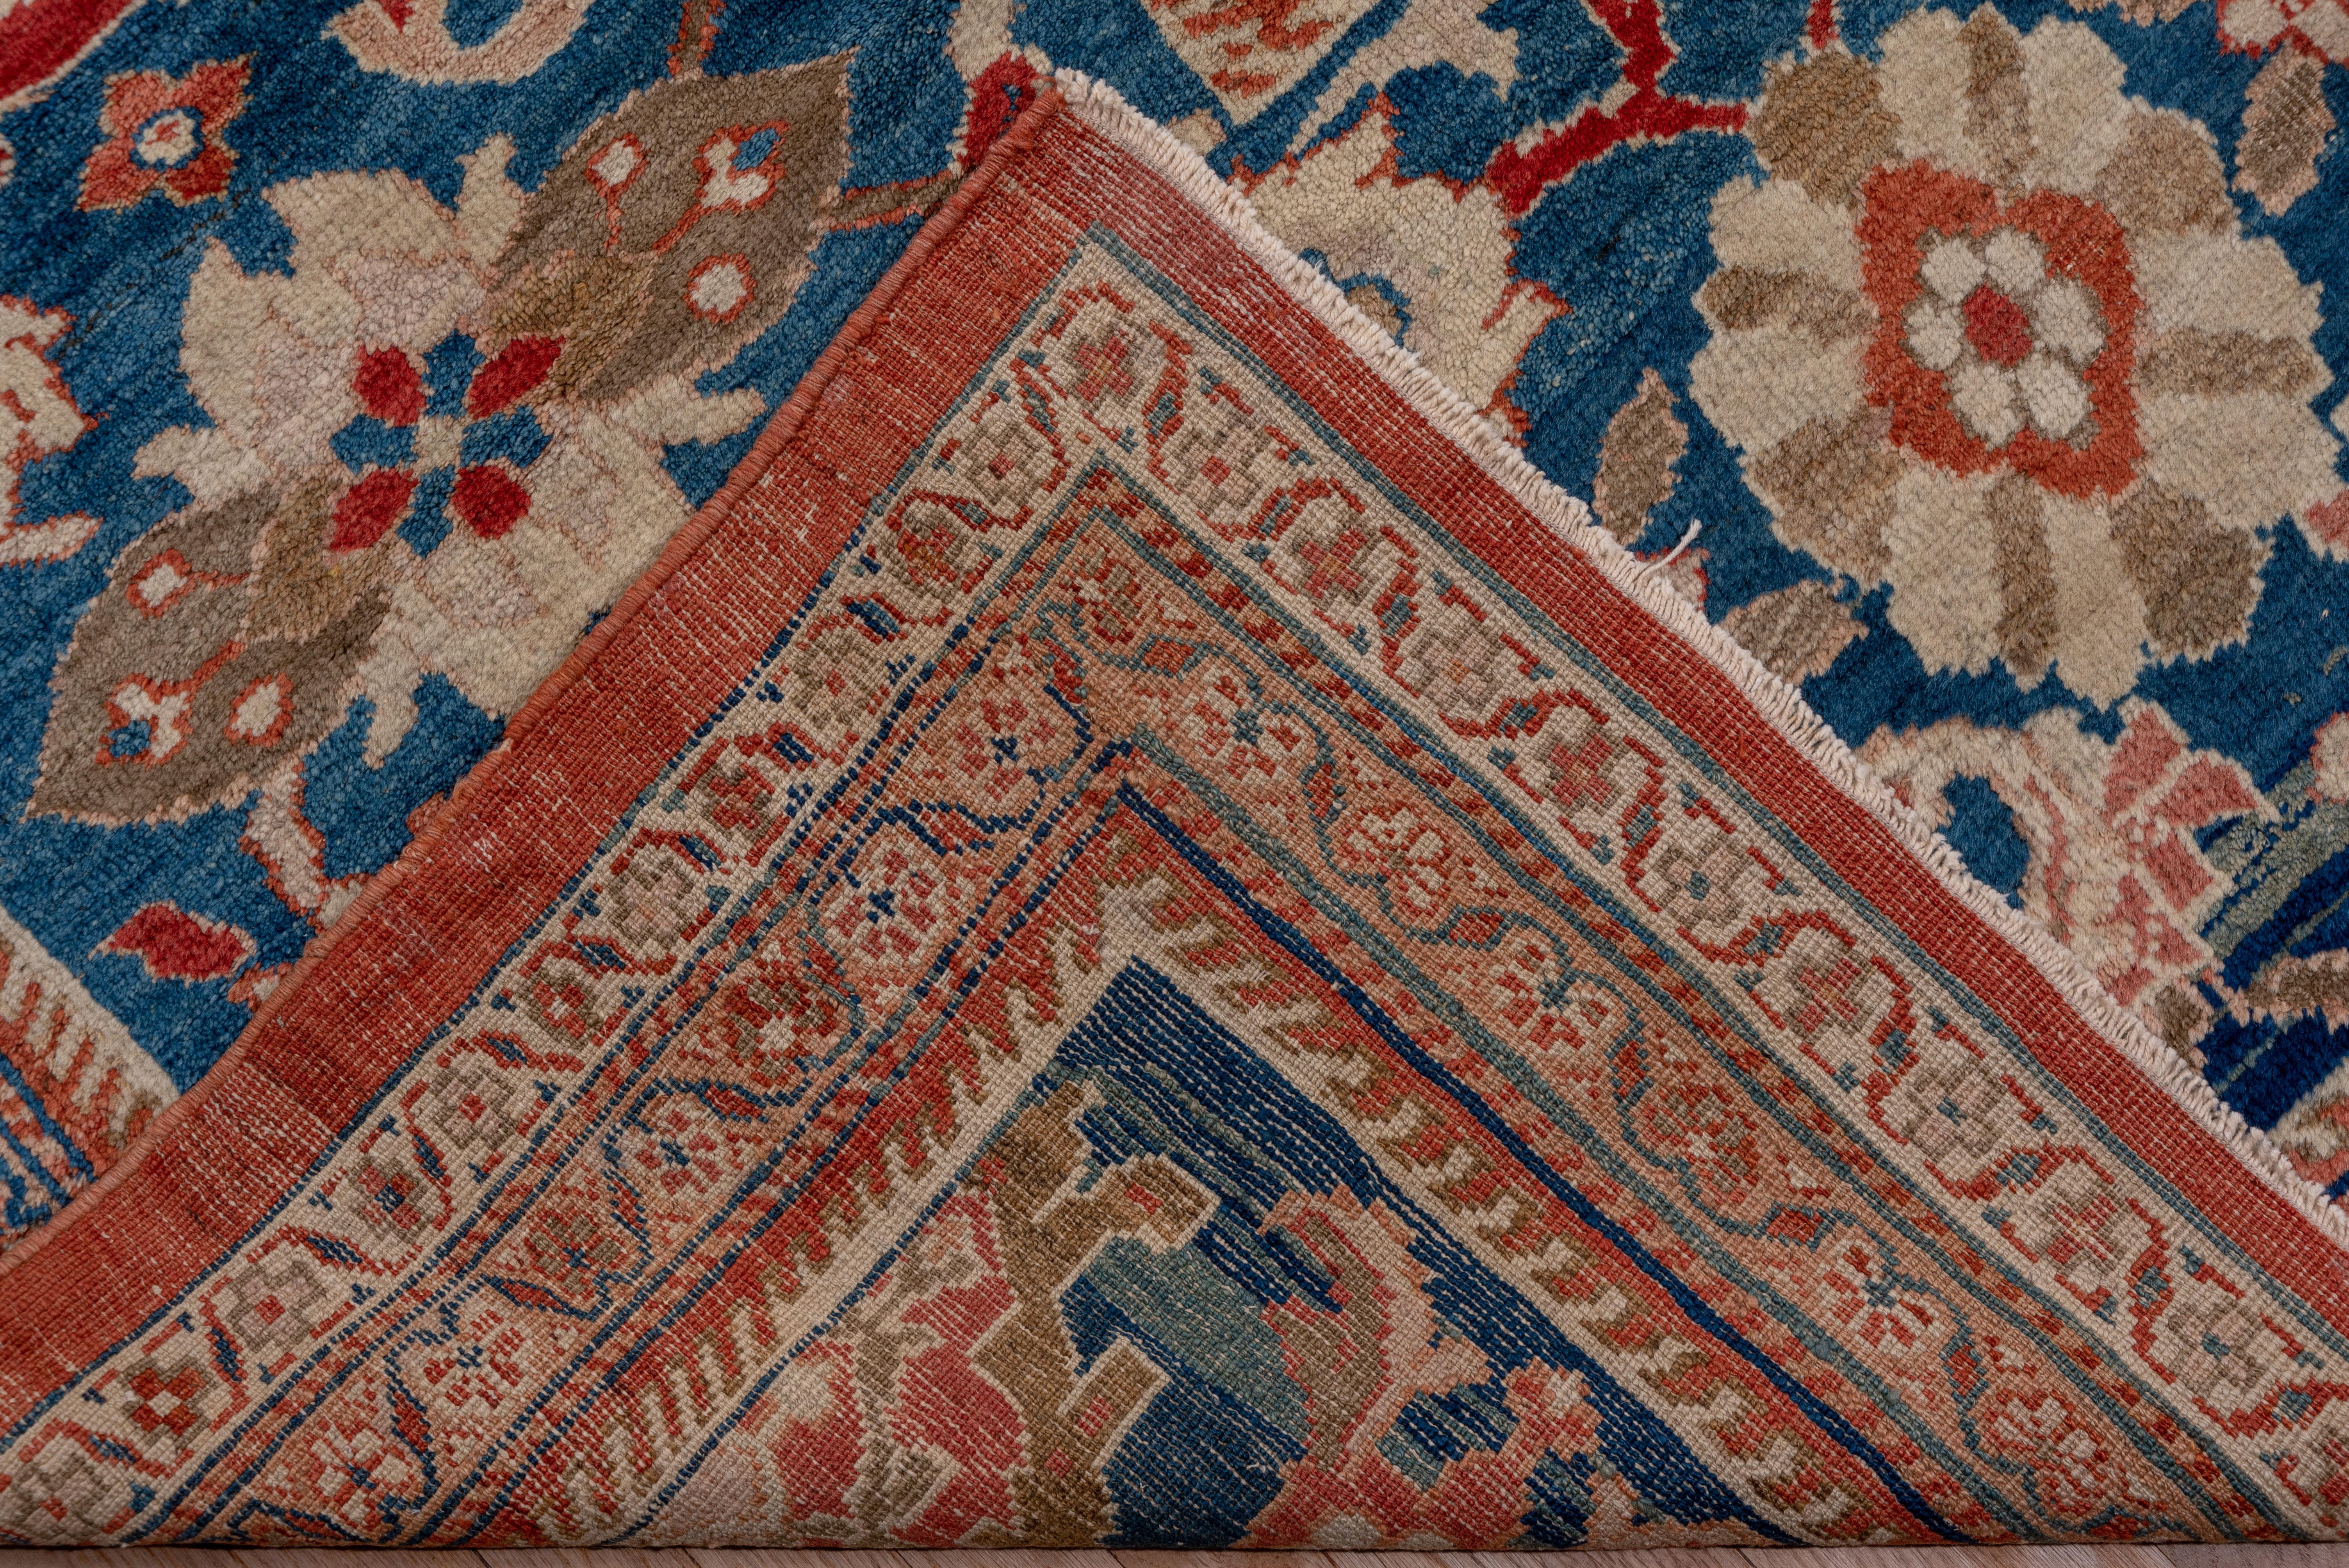 Magnificent Antique Persian Sultanabad Carpet, Bright Orange & Red Allover Field 6